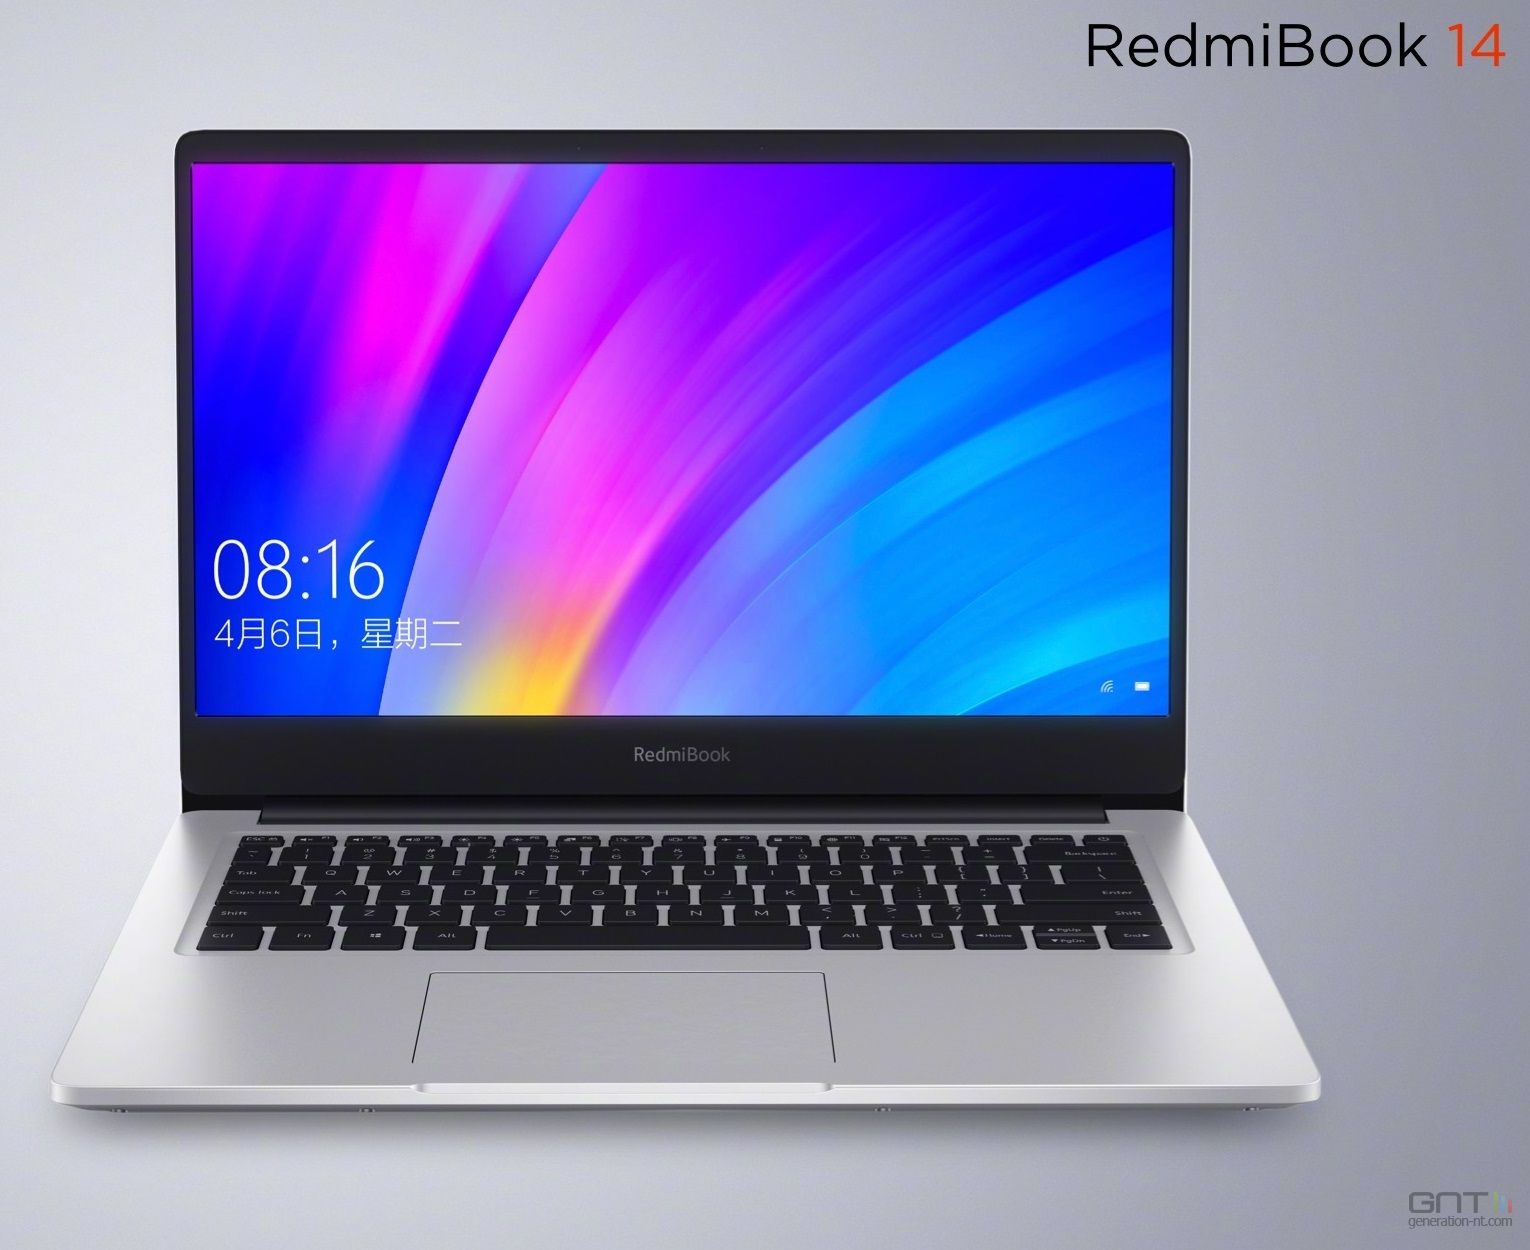 RedmiBook 14 - Notebook